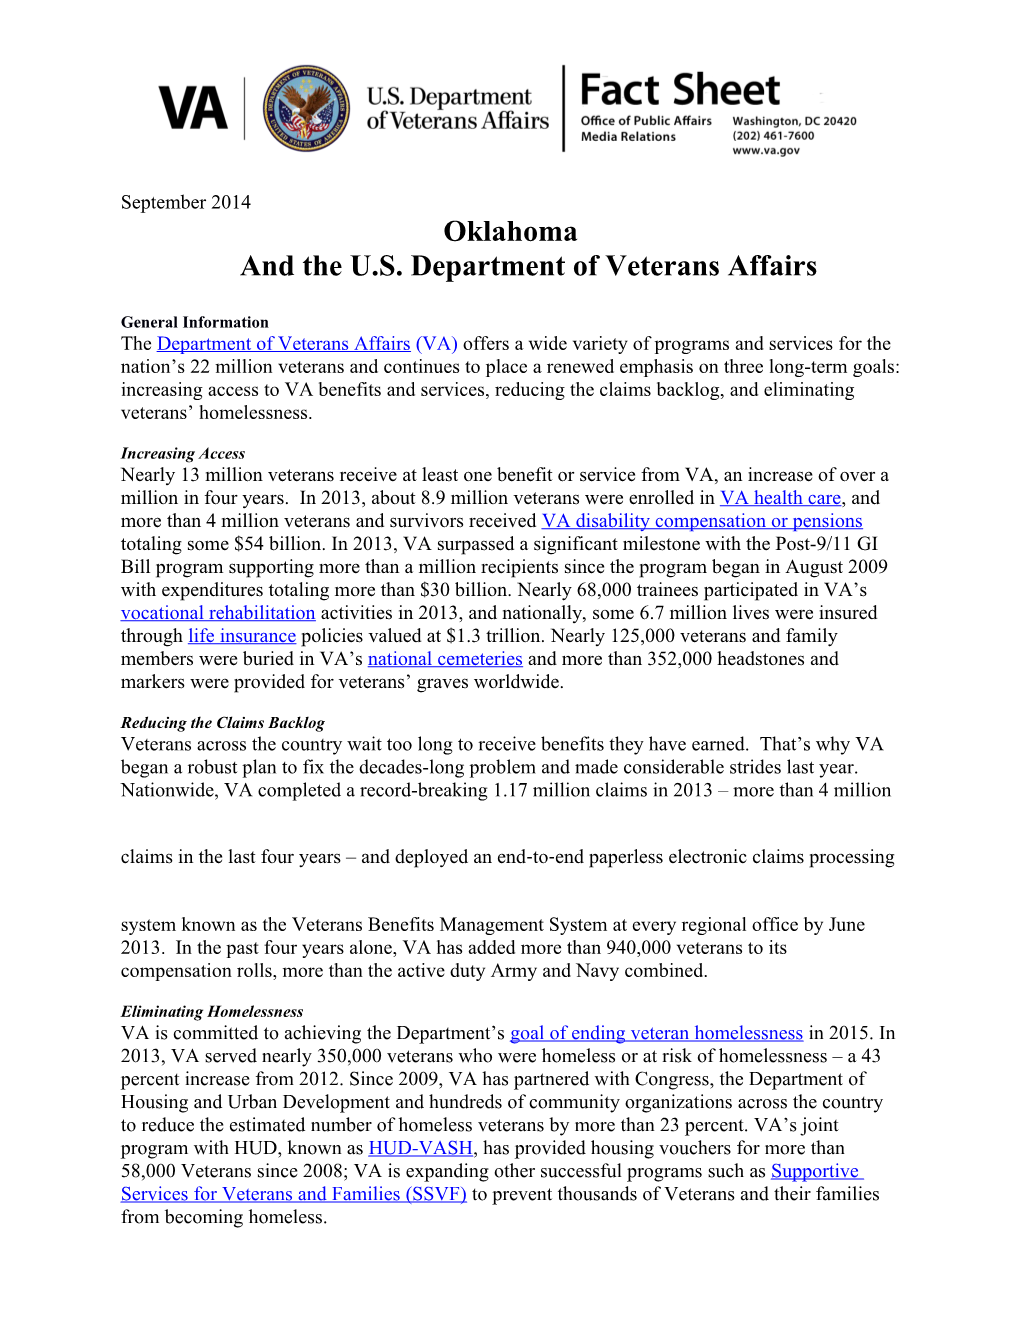 Oklahomaand the U.S. Department of Veterans Affairs